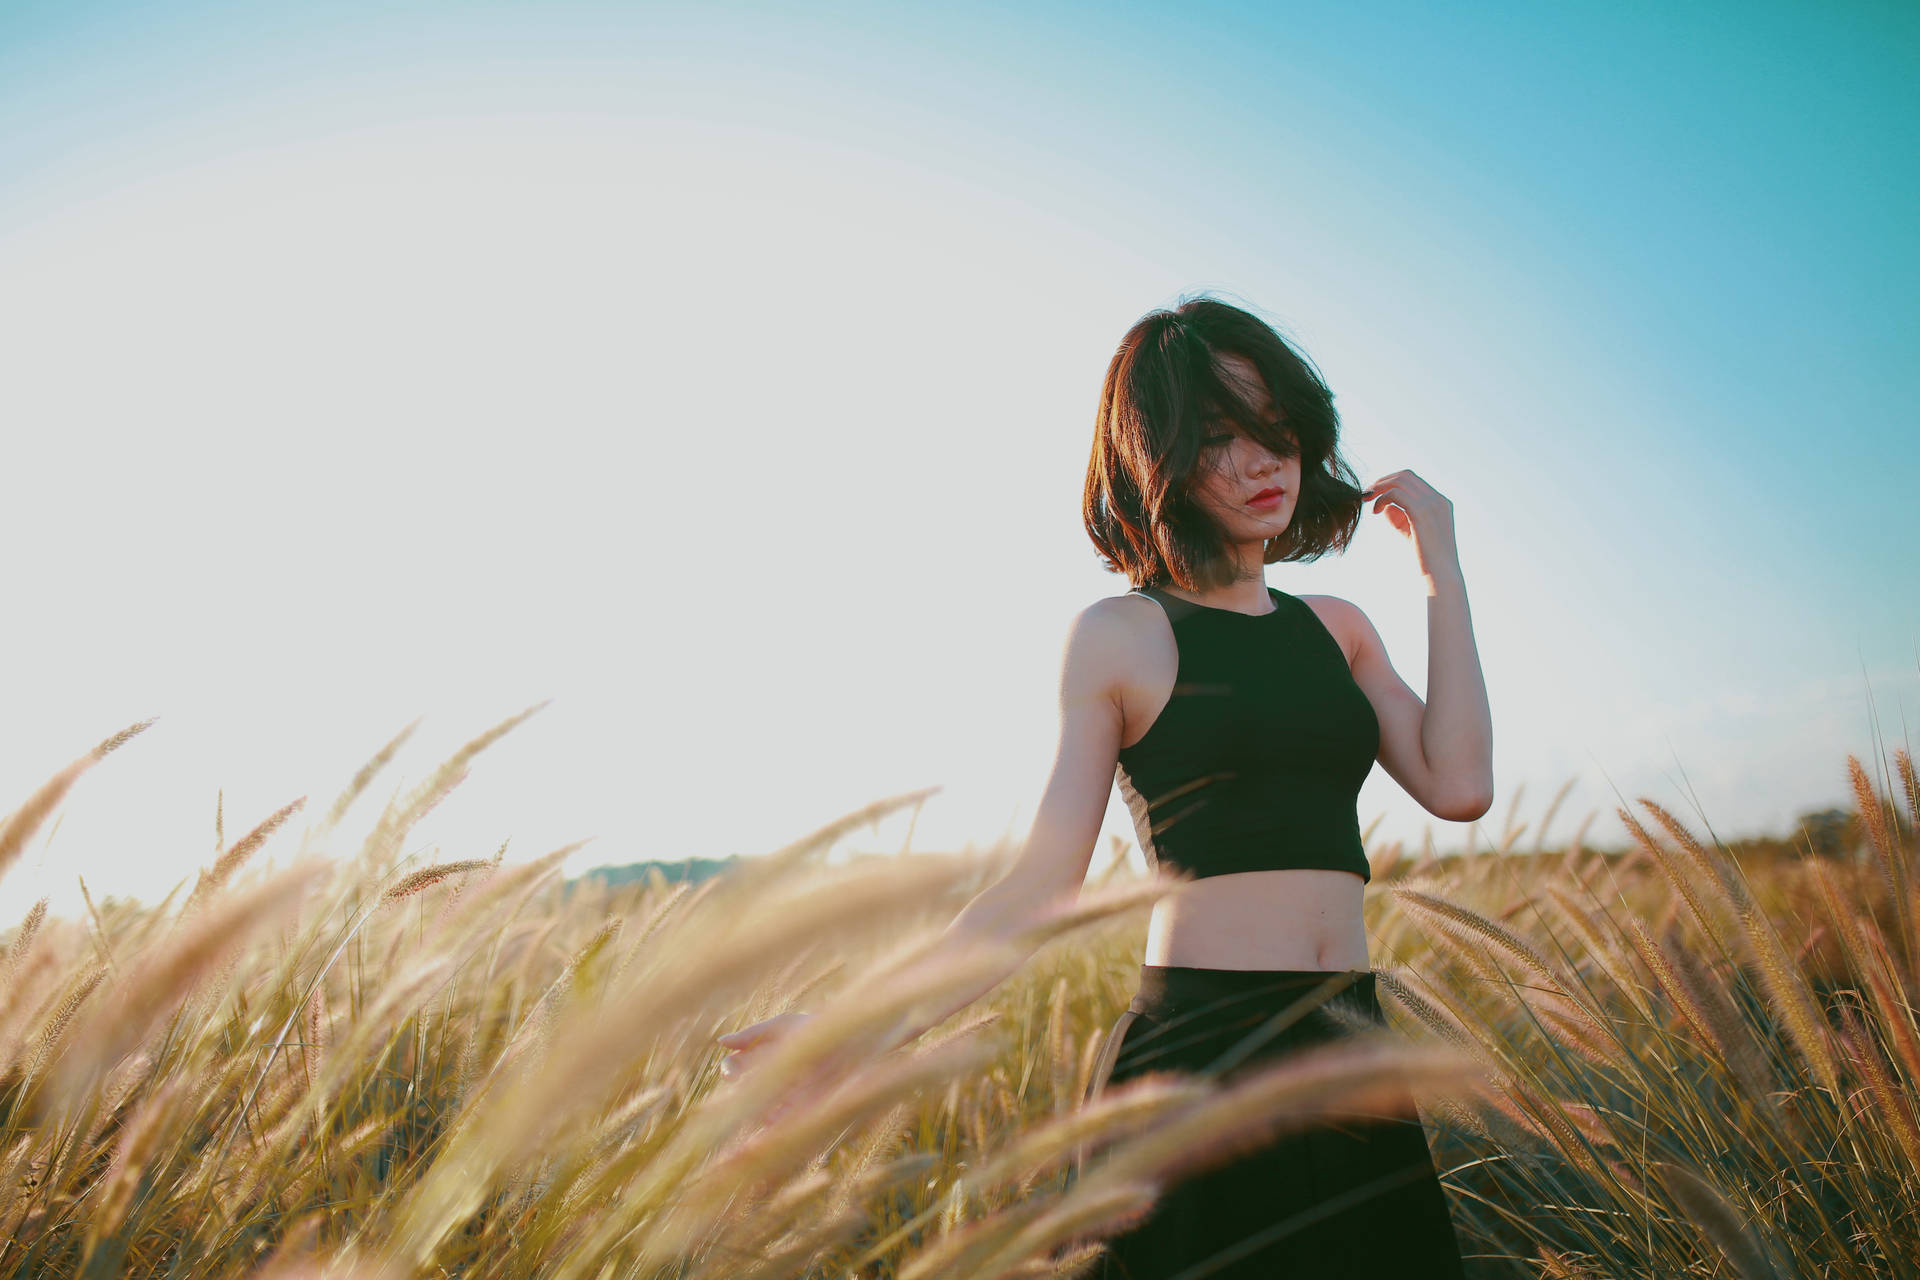 A Lonely Girl Walking In A Sunlit Field Background